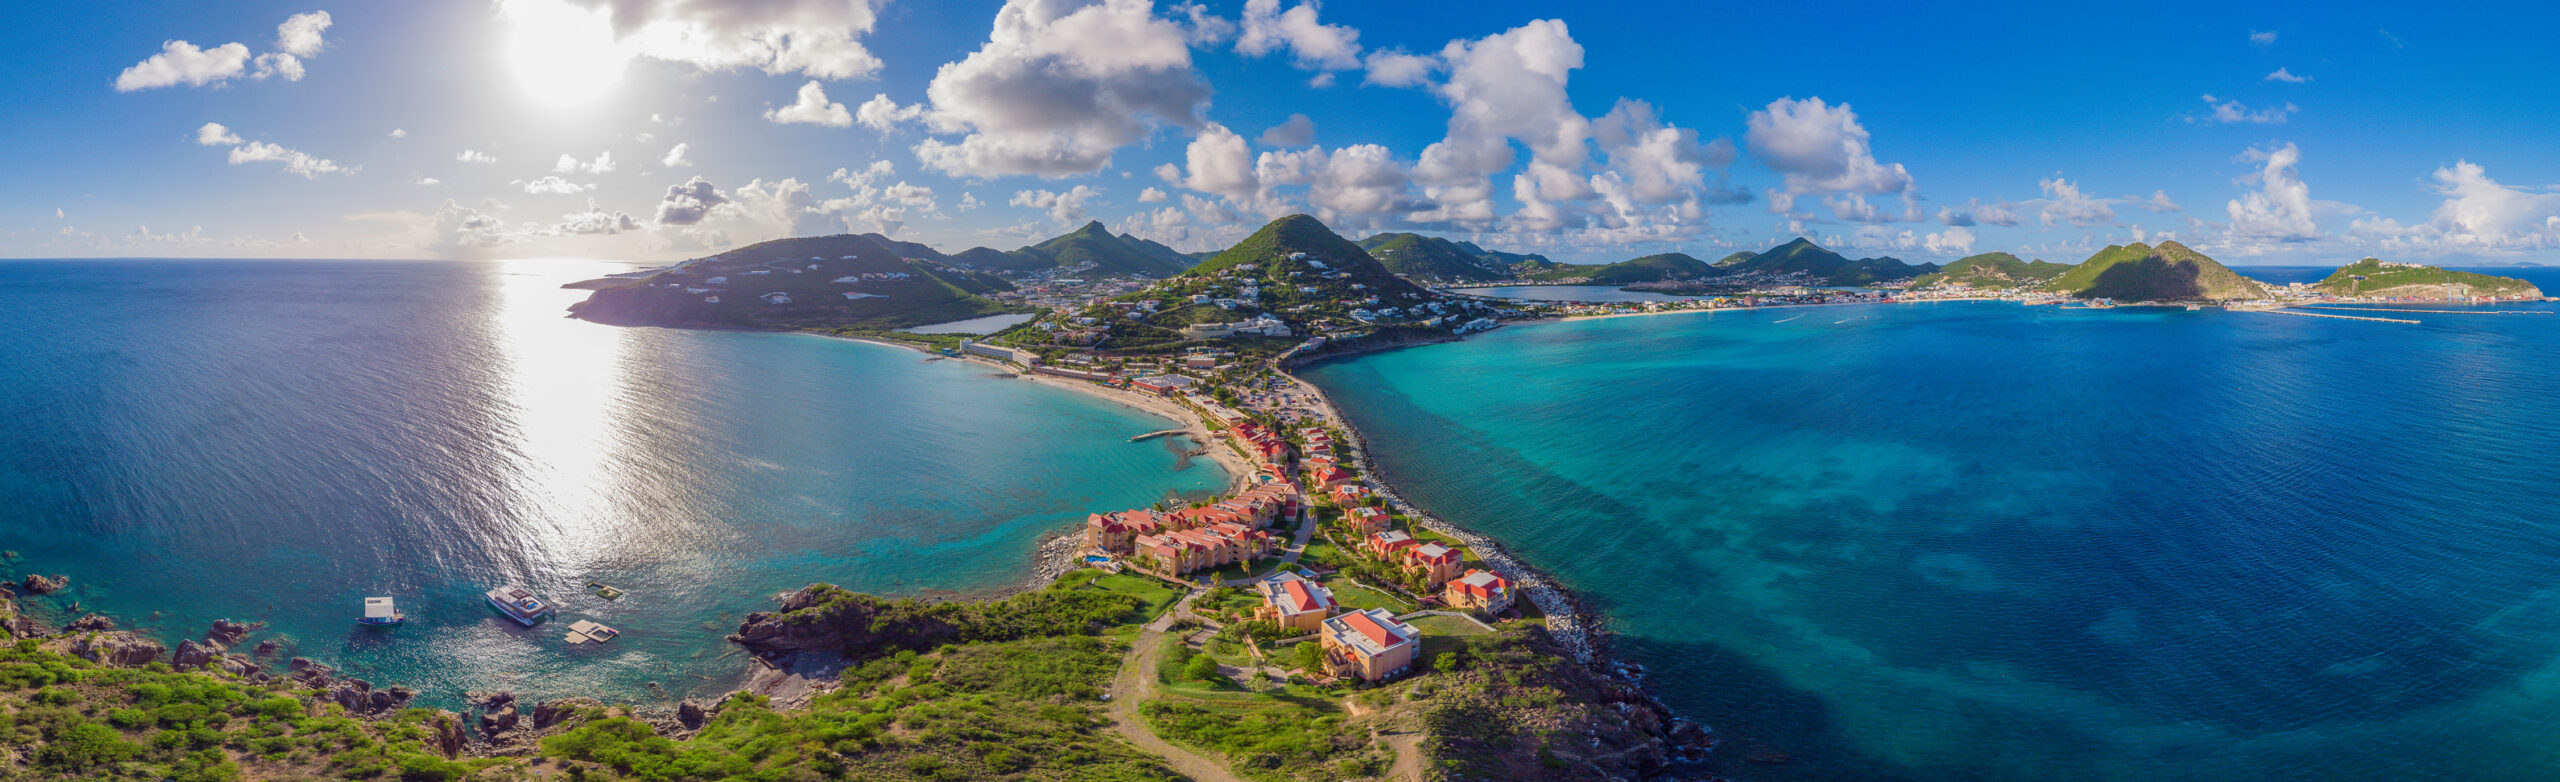 Caribbean Coastline